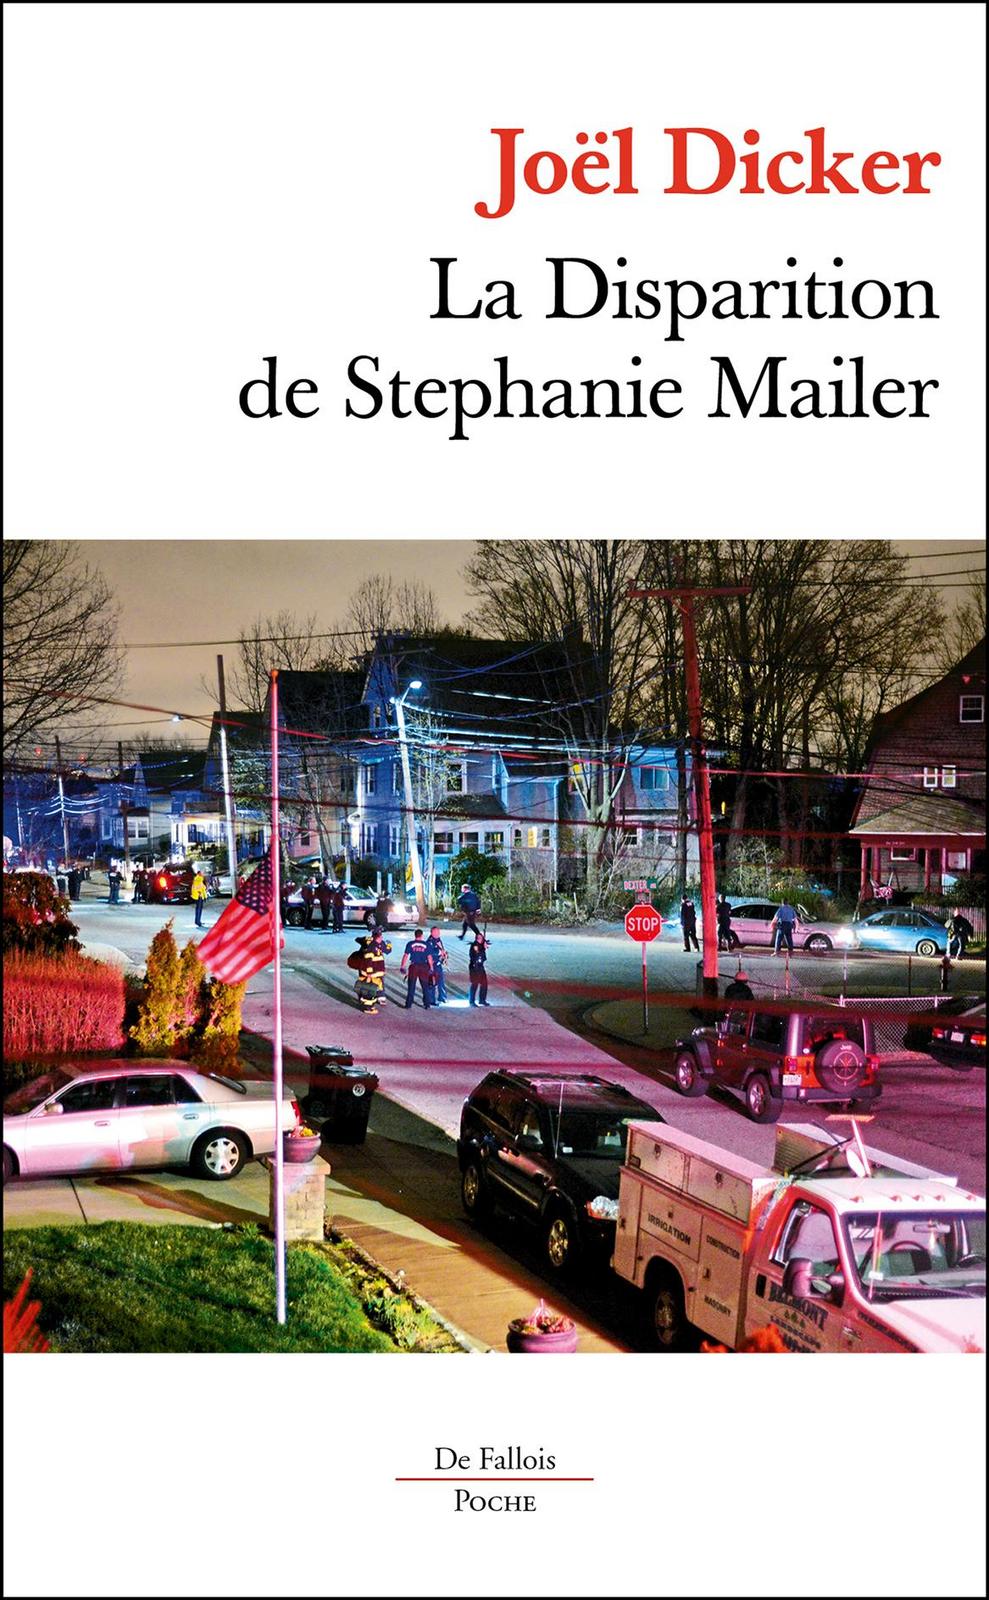 Joël Dicker: La disparition de Stephanie Mailer (French language, 2019)